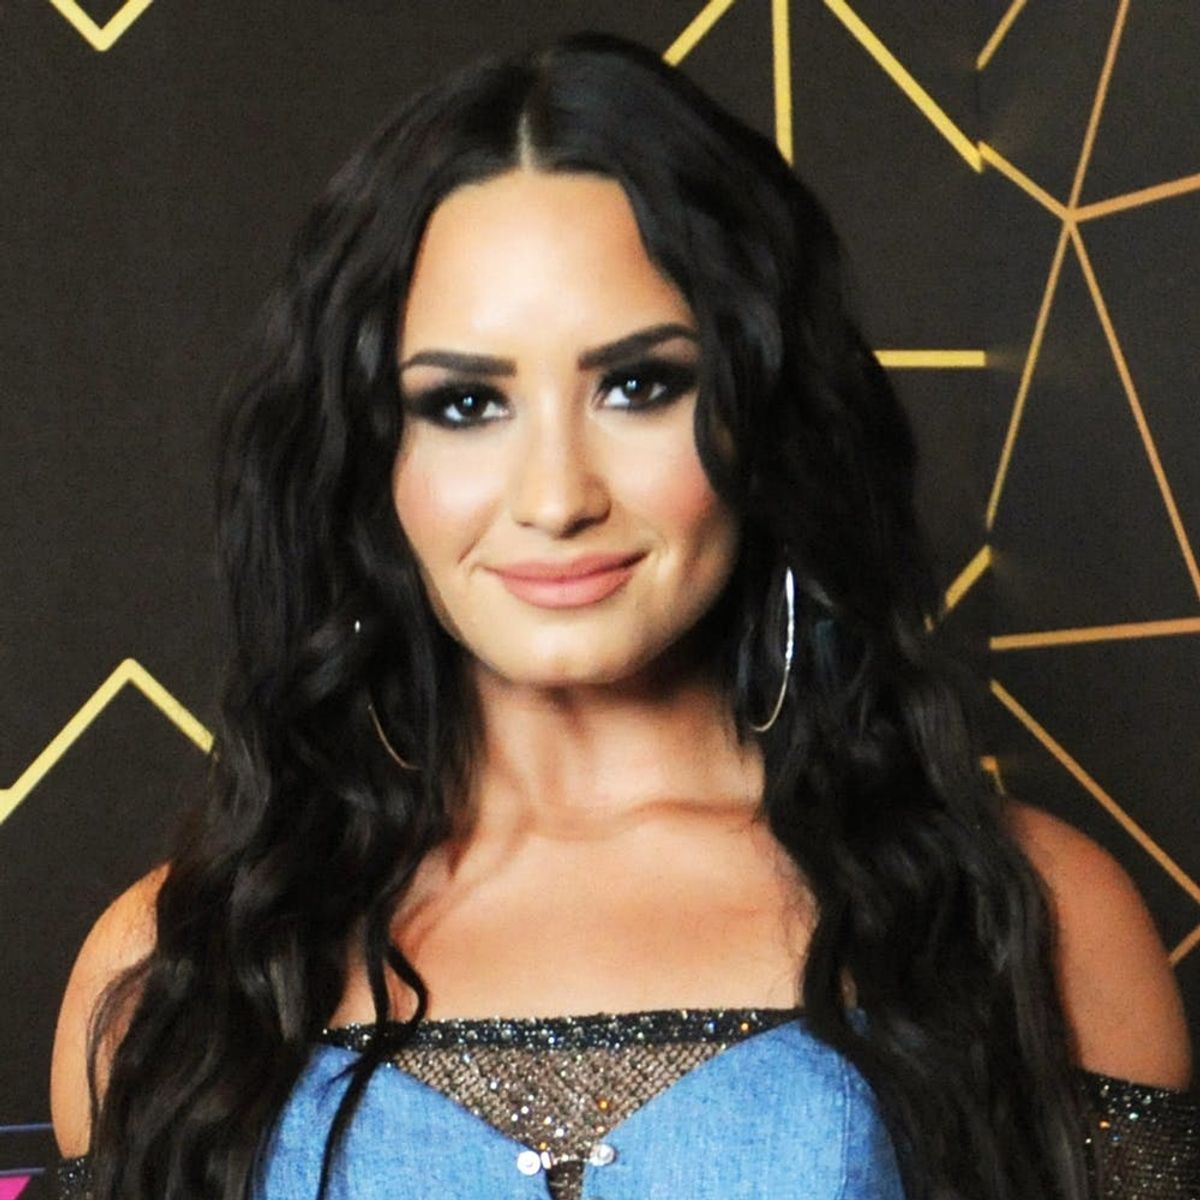 Demi Lovato’s Next Tour Will Offer Mental Health Workshops for Fans